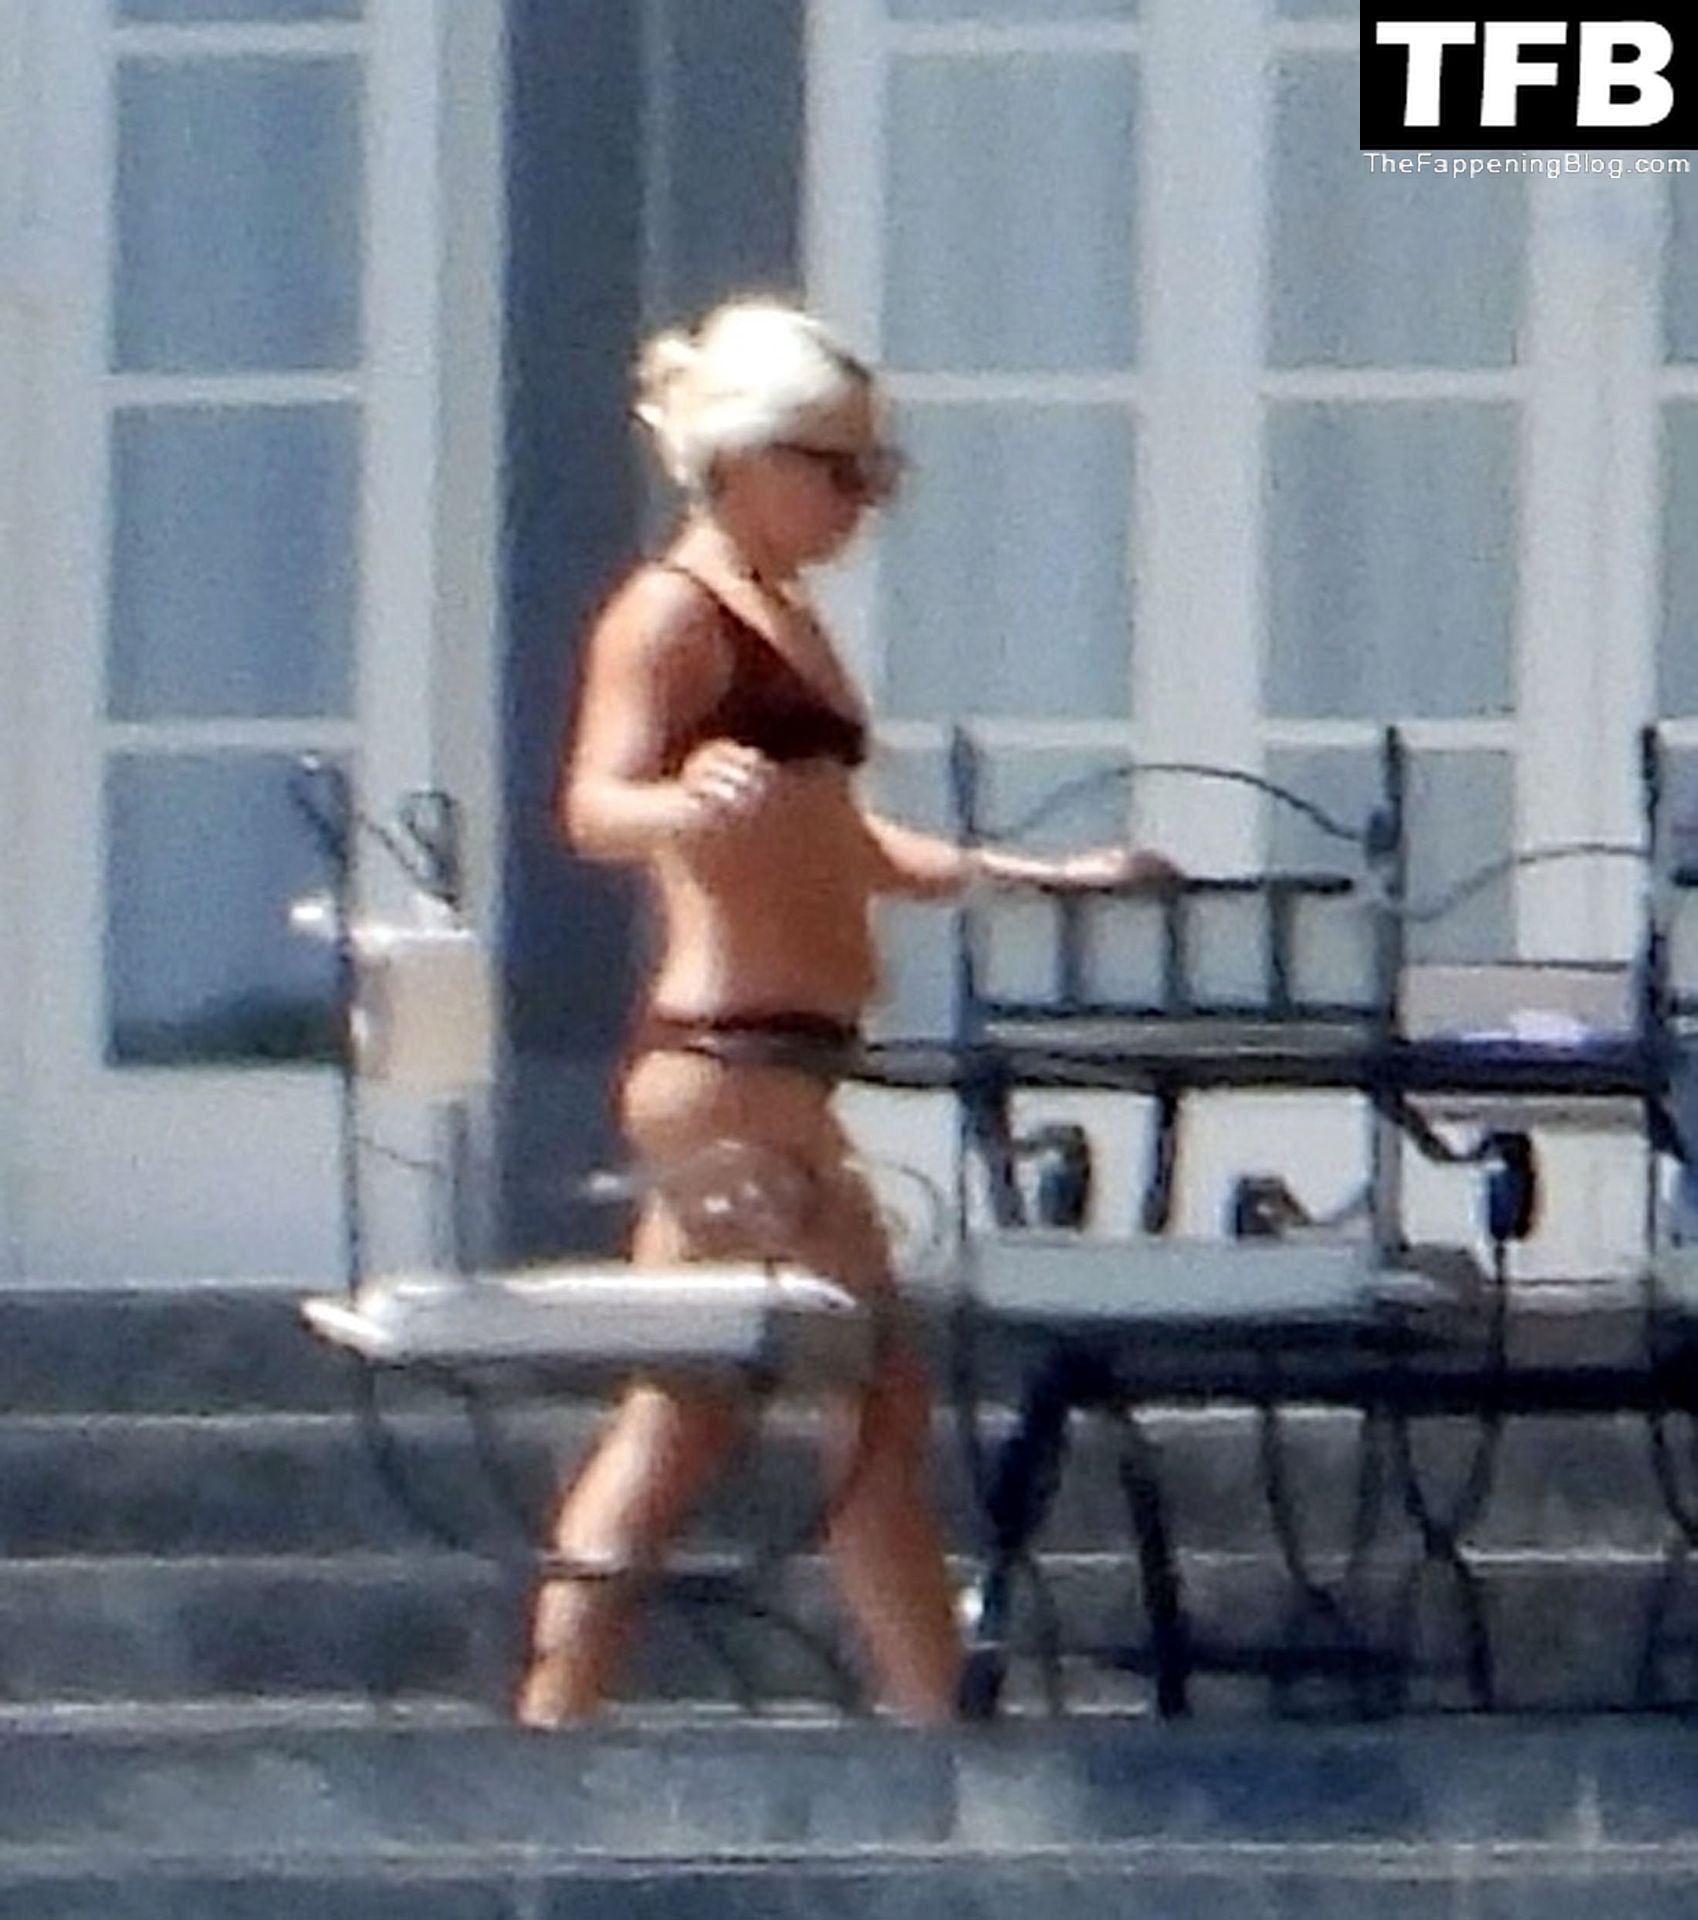 Lady-Gaga-Sexy-The-Fappening-Blog-6.jpg